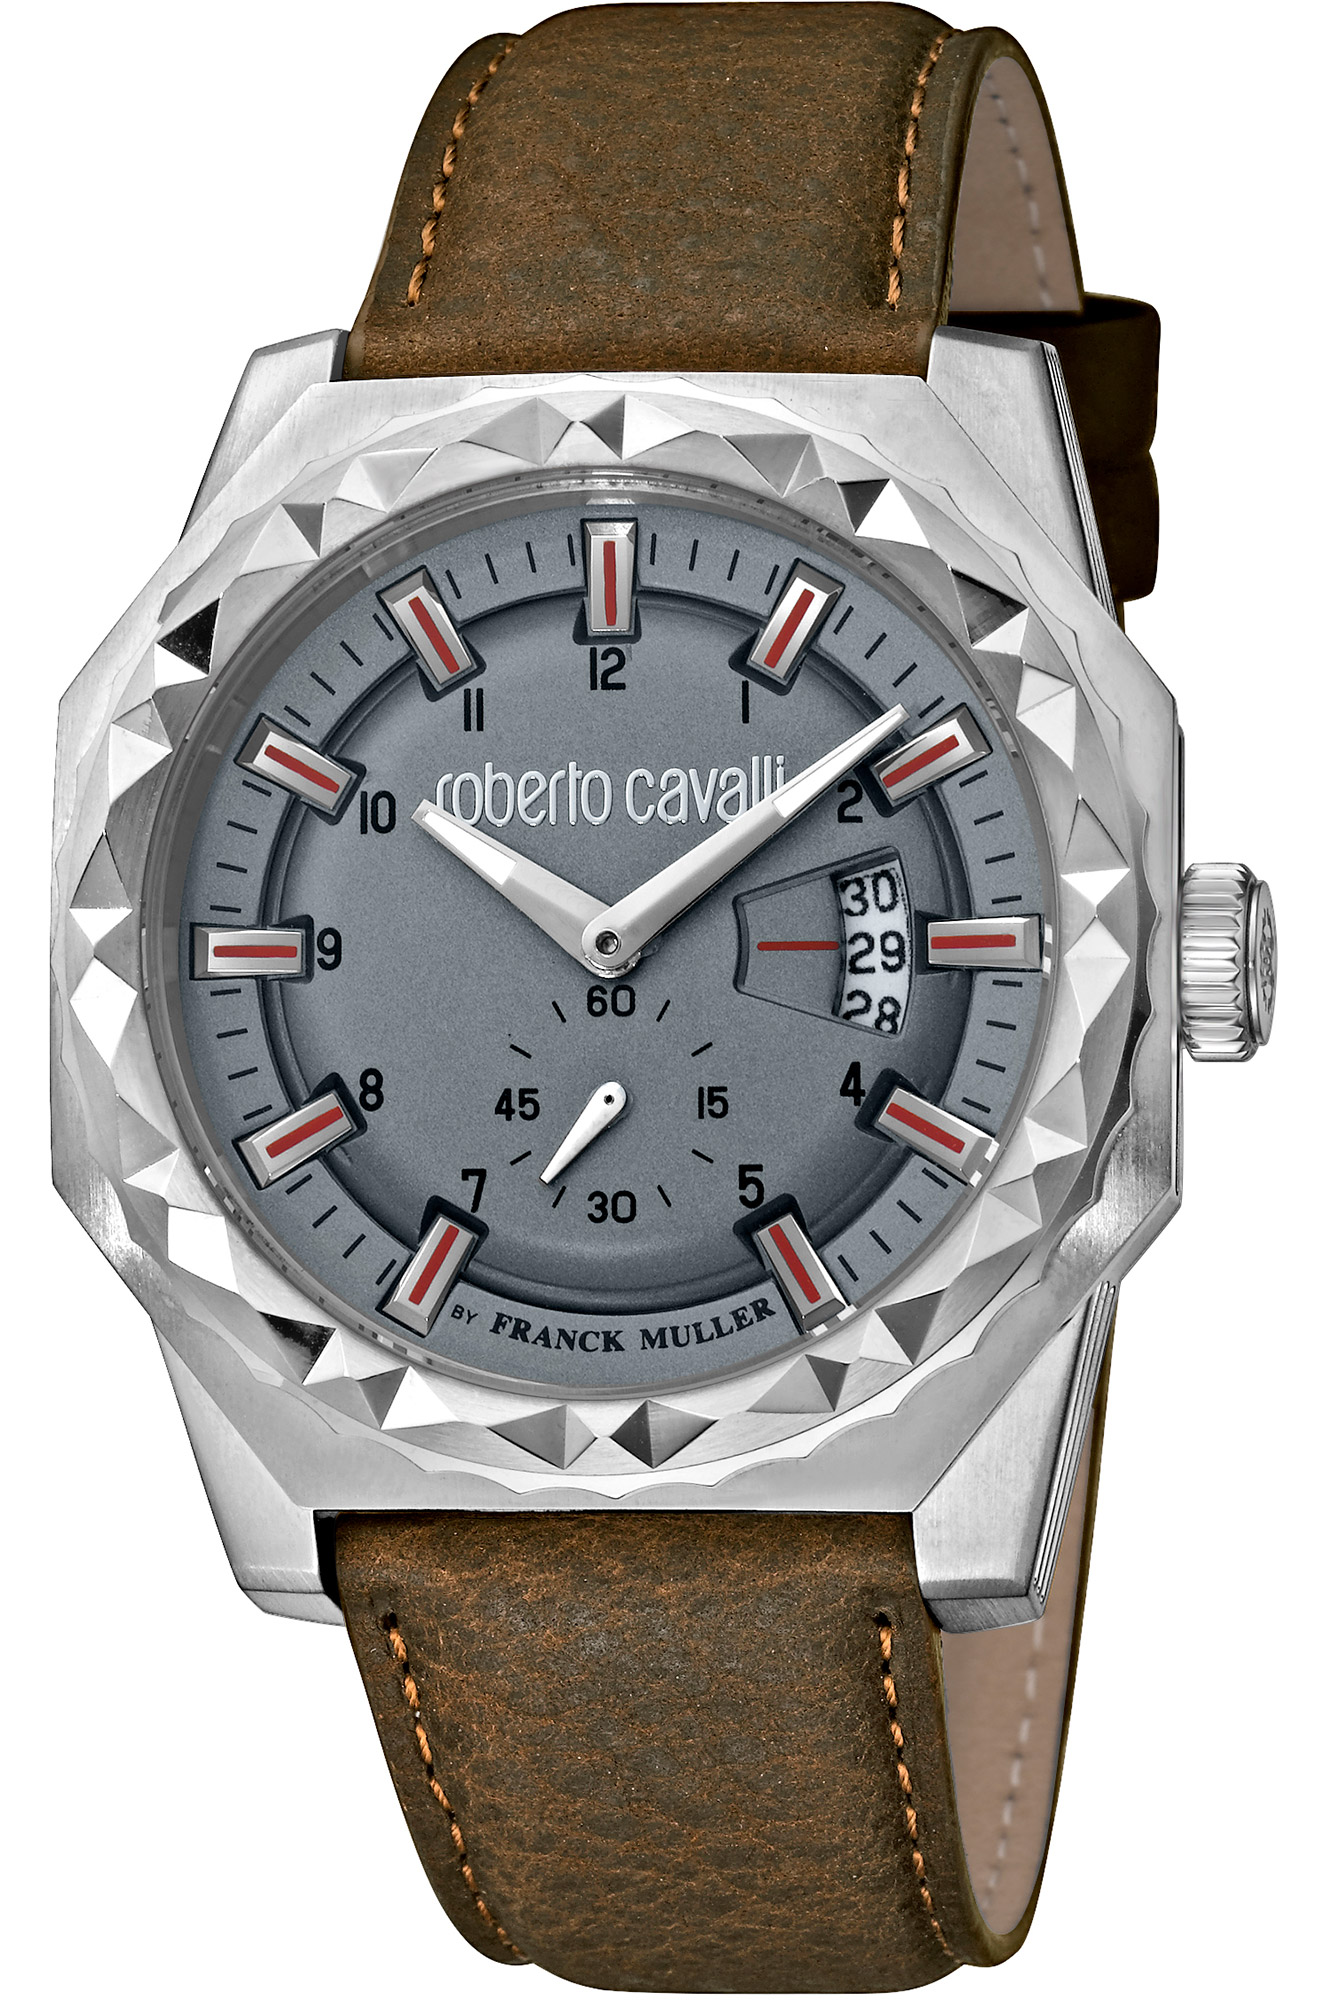 Reloj Roberto Cavalli by Franck Muller rv1g069l0011